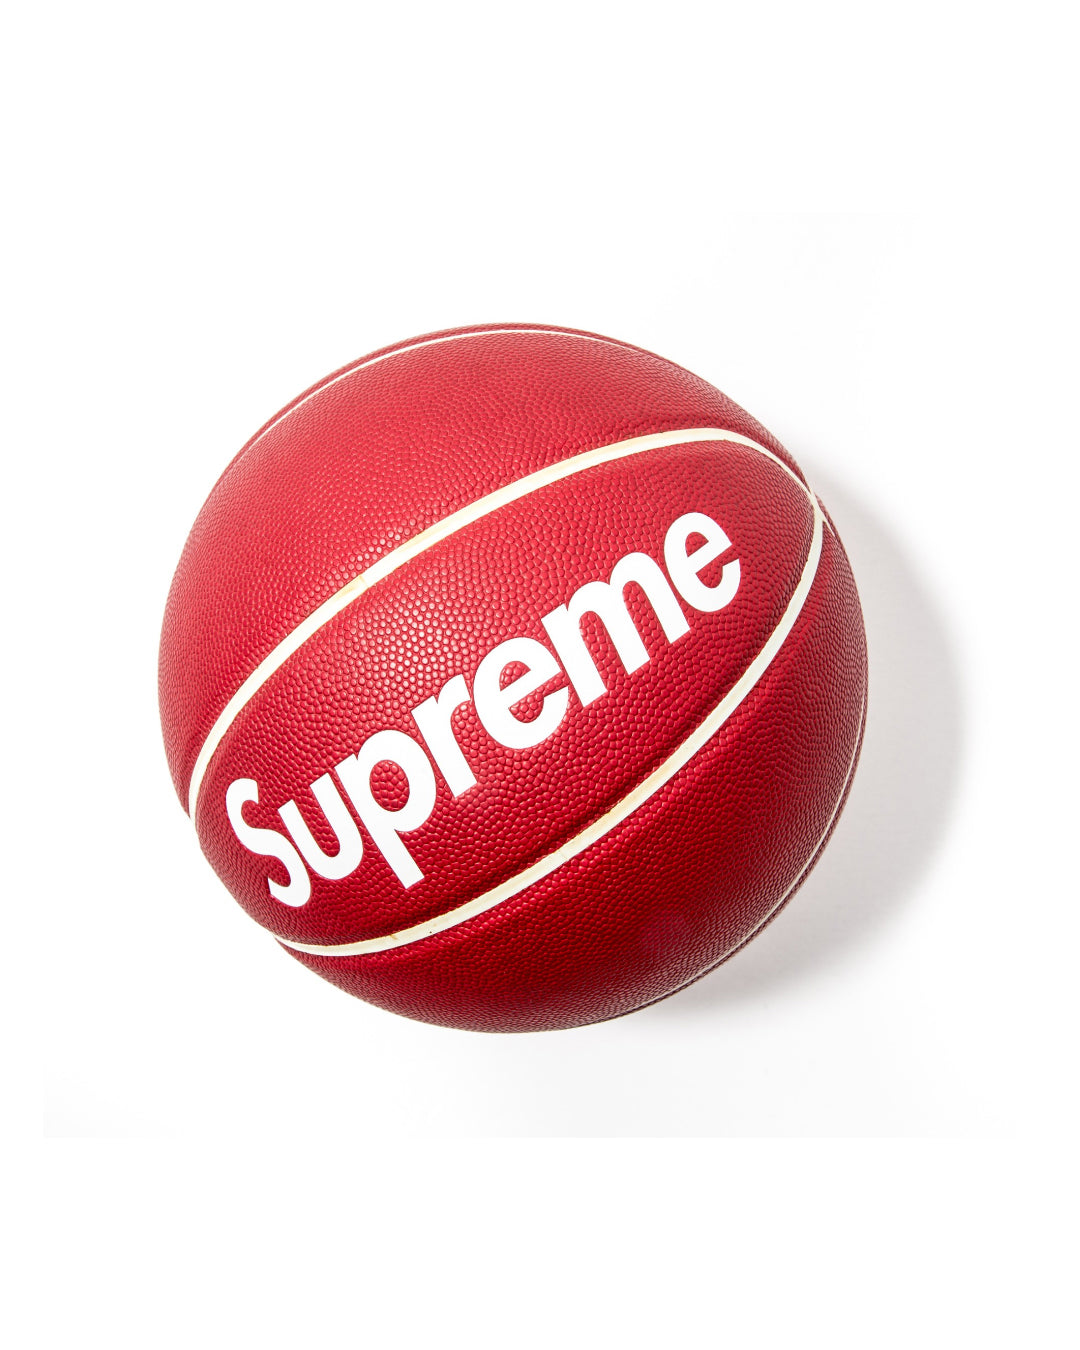 SUPREME SPALDING “EACH ONE TEACH ONE” BASKETBALL RED - RARE